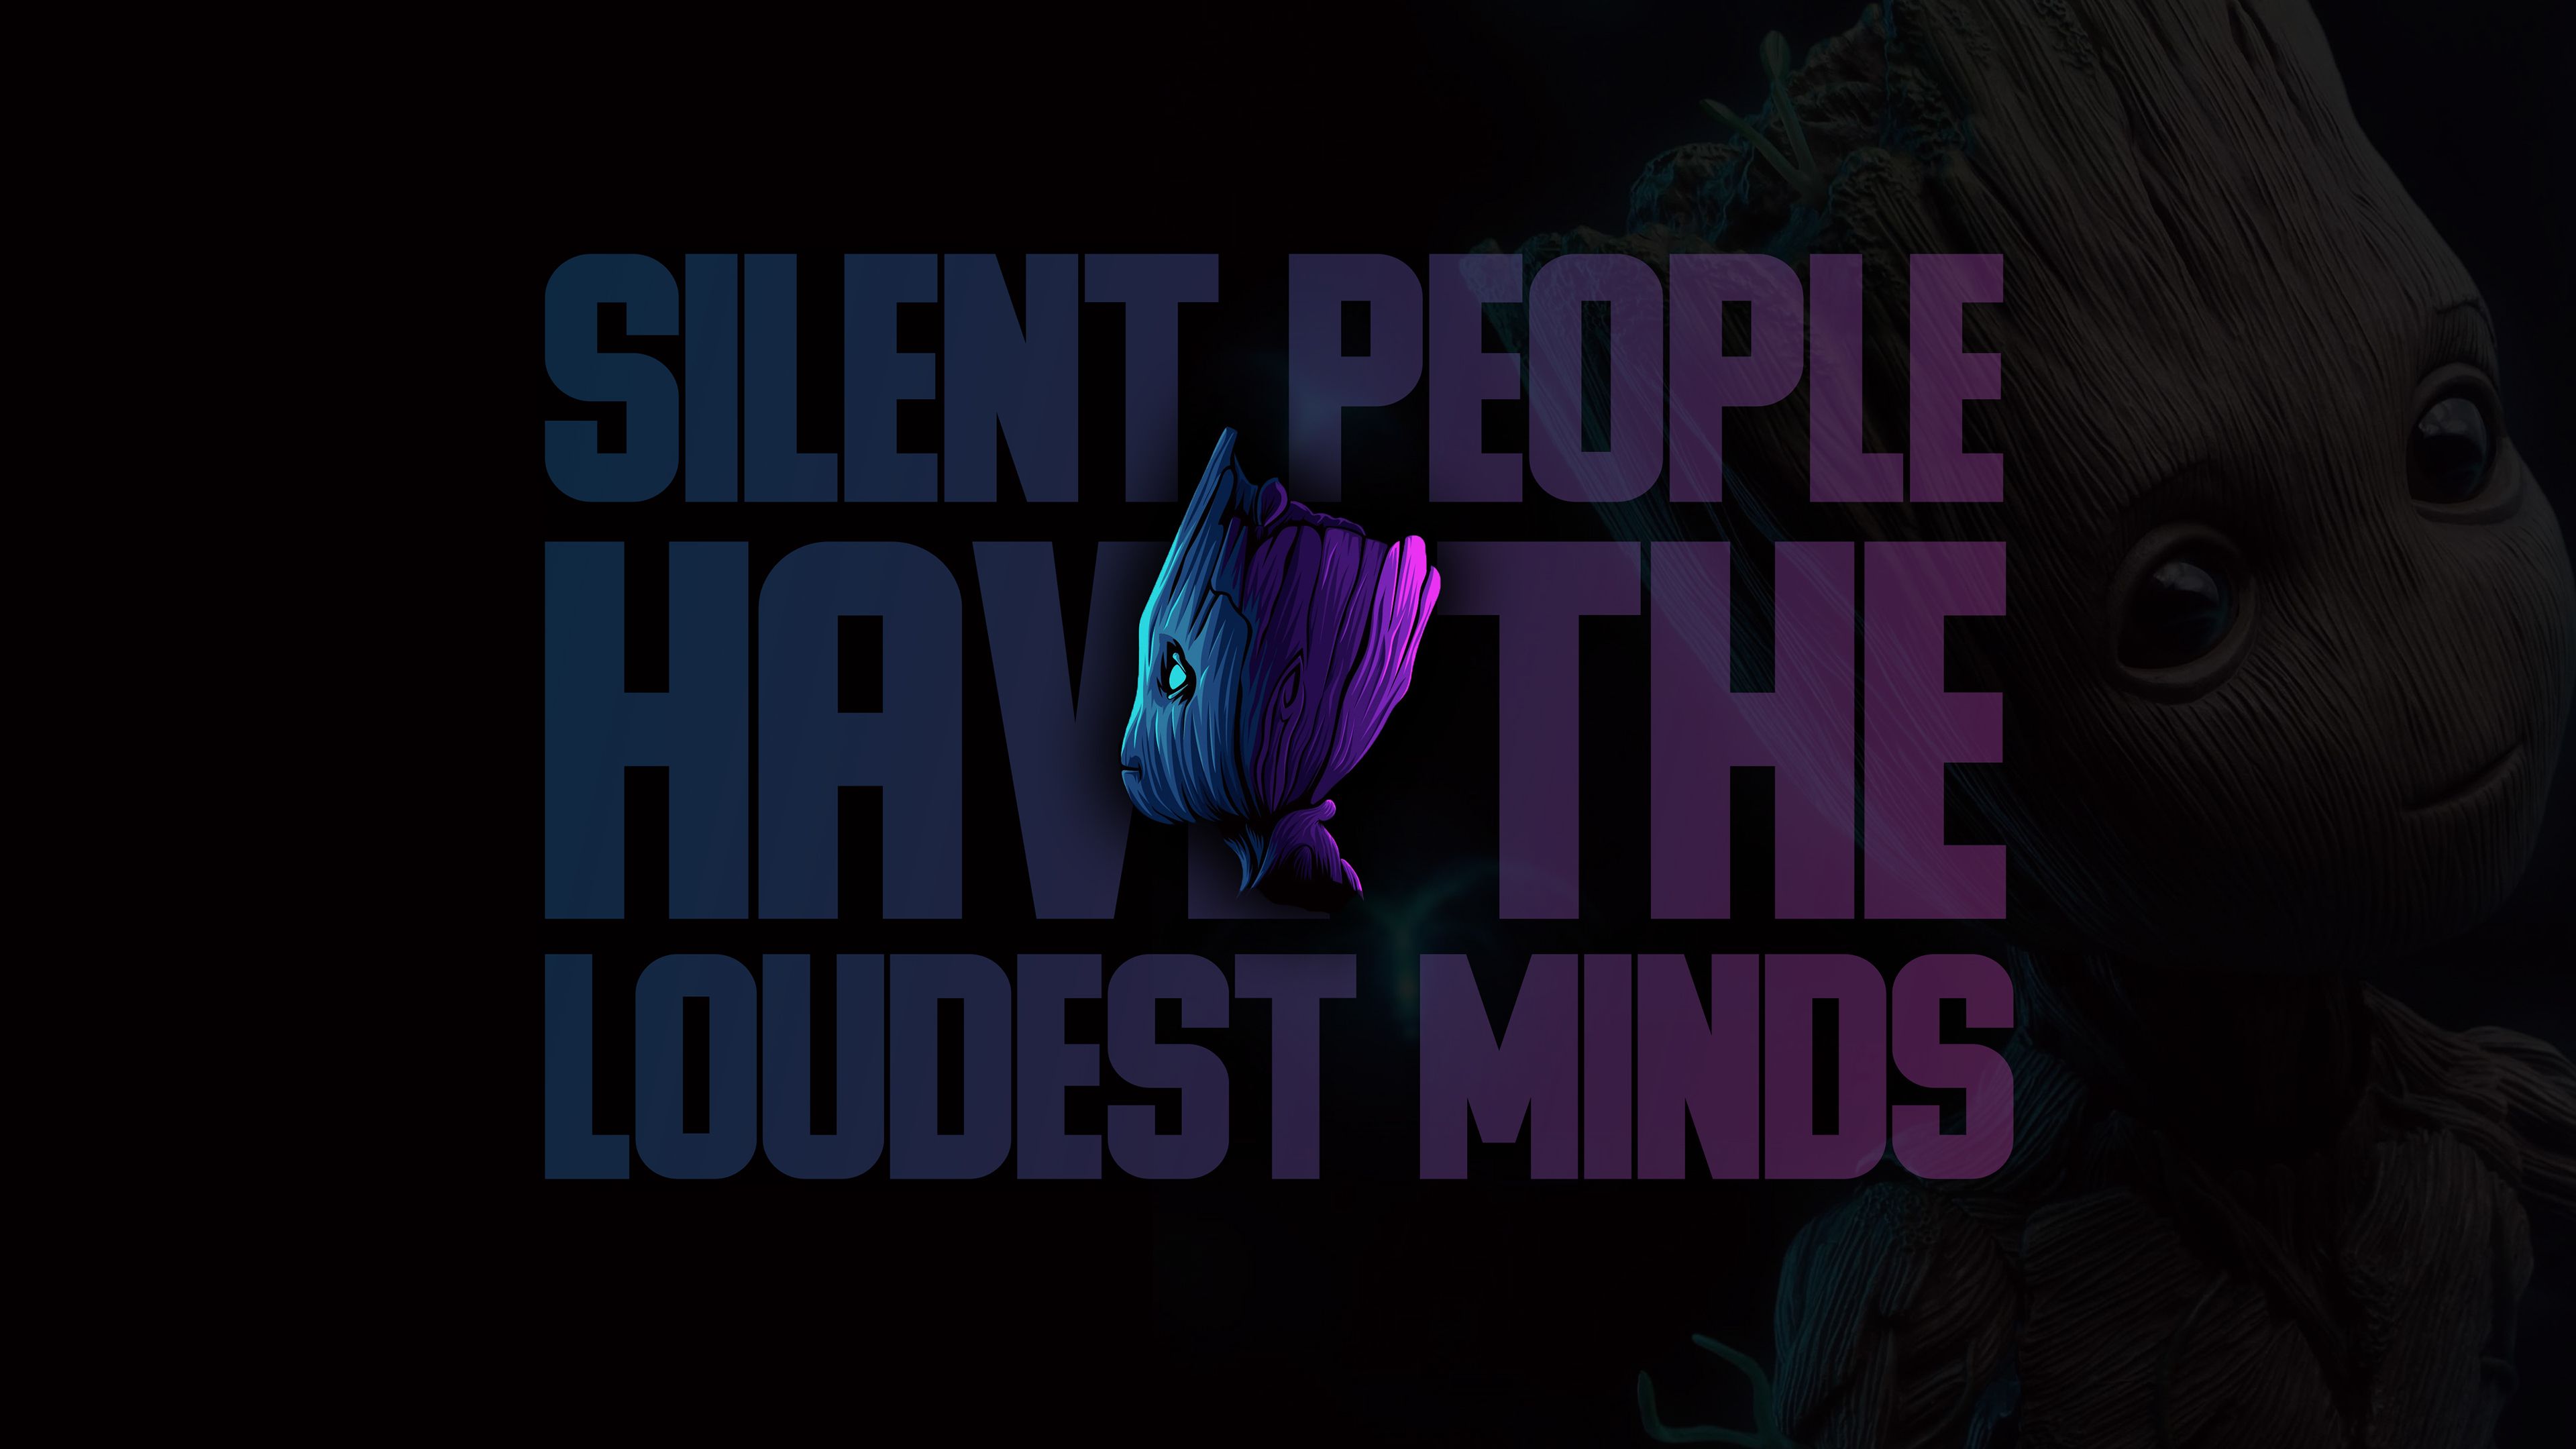 Baby Groot 4K Wallpaper, Silent People Have The Loudest Minds, Popular Quotes, Dark, Black Dark